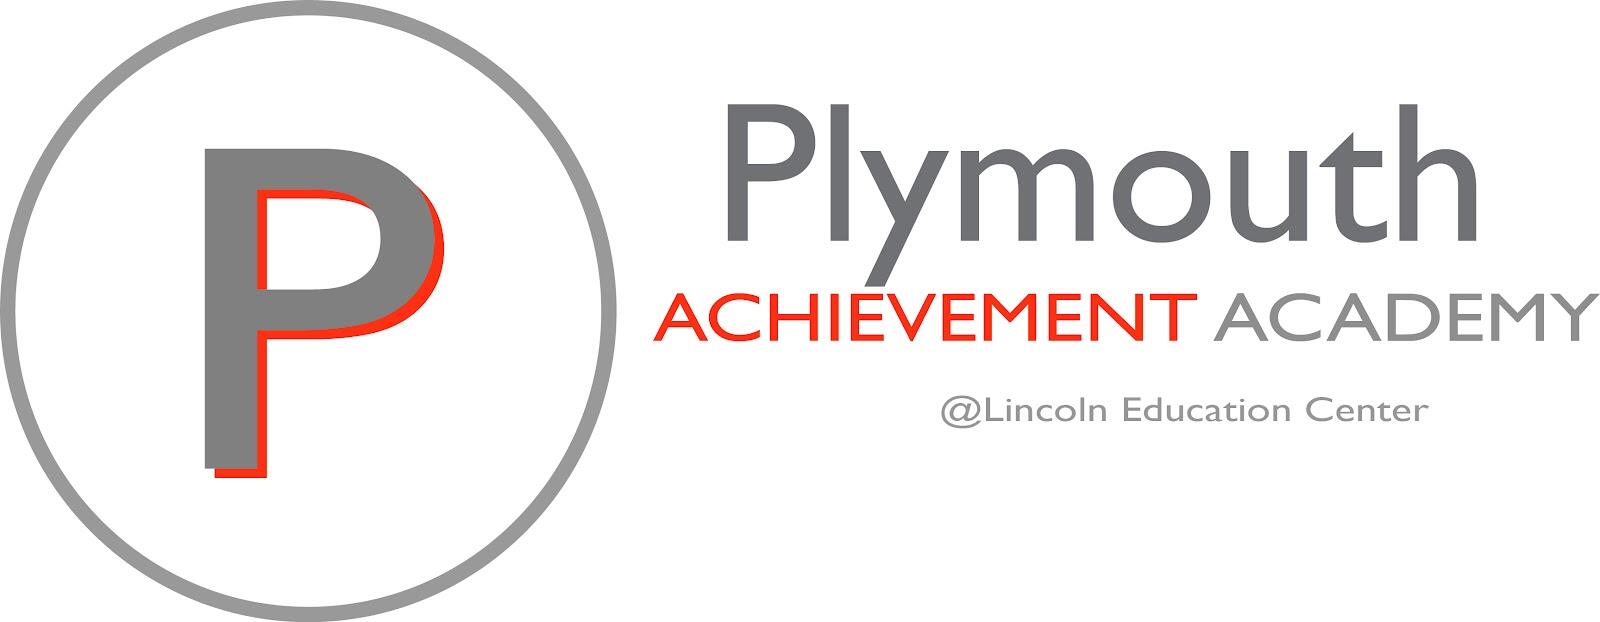 plymouth achievement academy logo